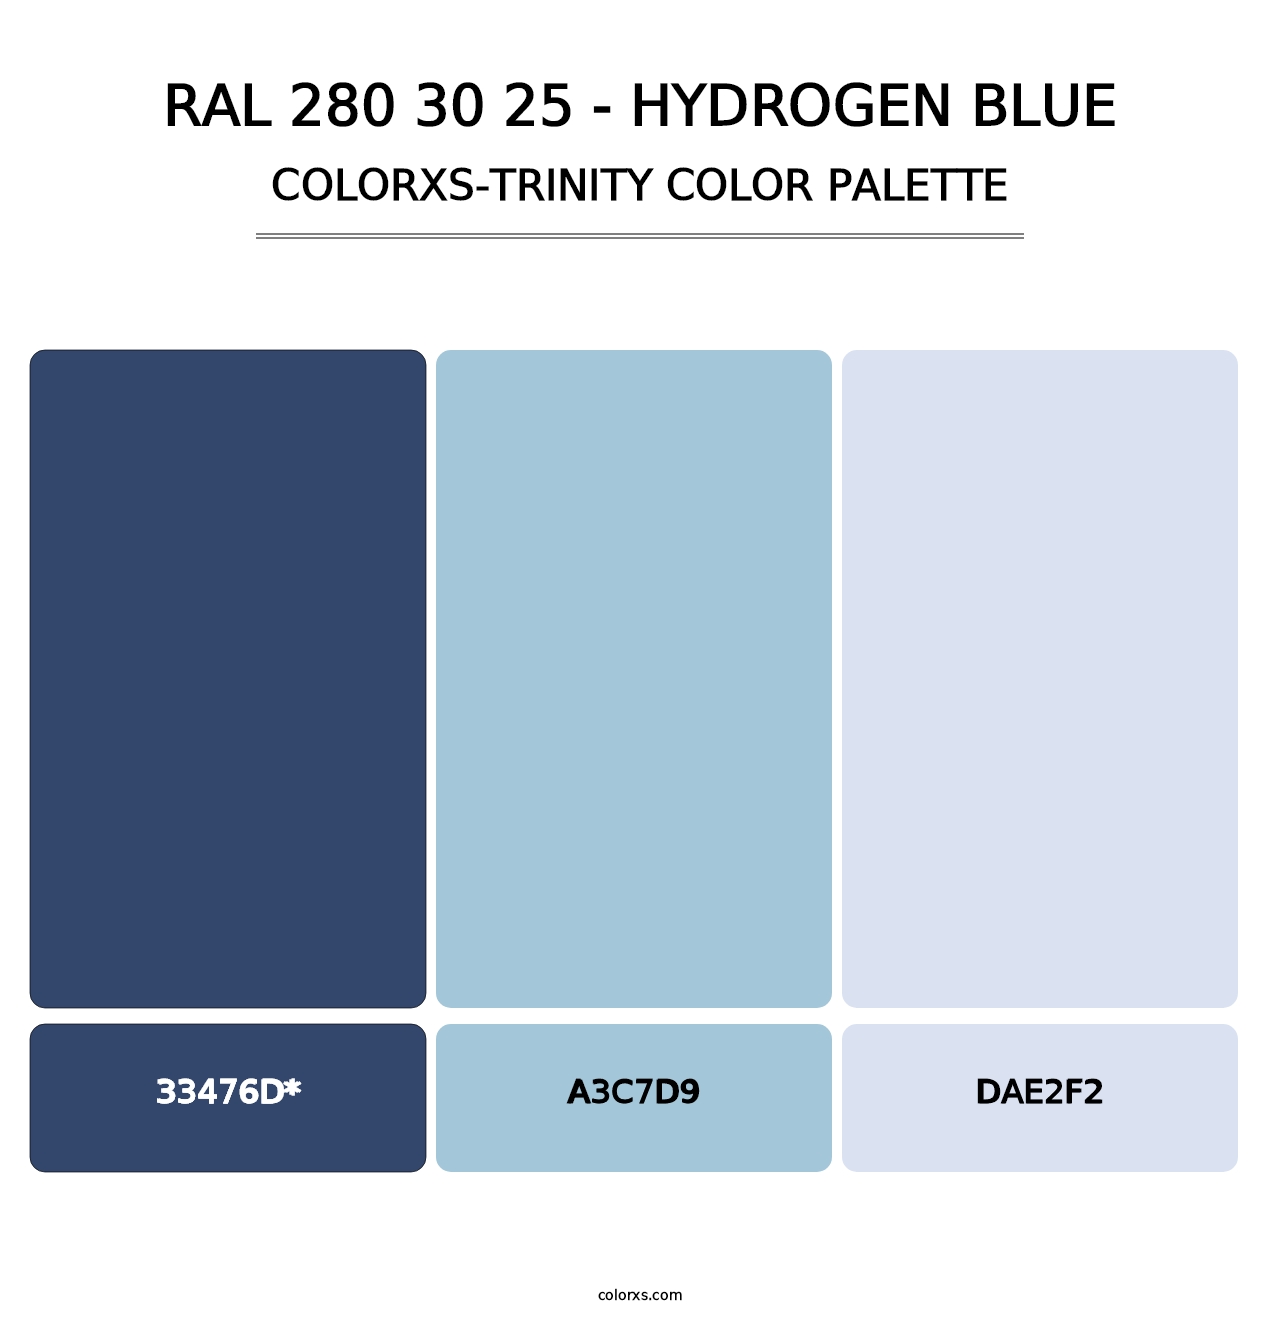 RAL 280 30 25 - Hydrogen Blue - Colorxs Trinity Palette